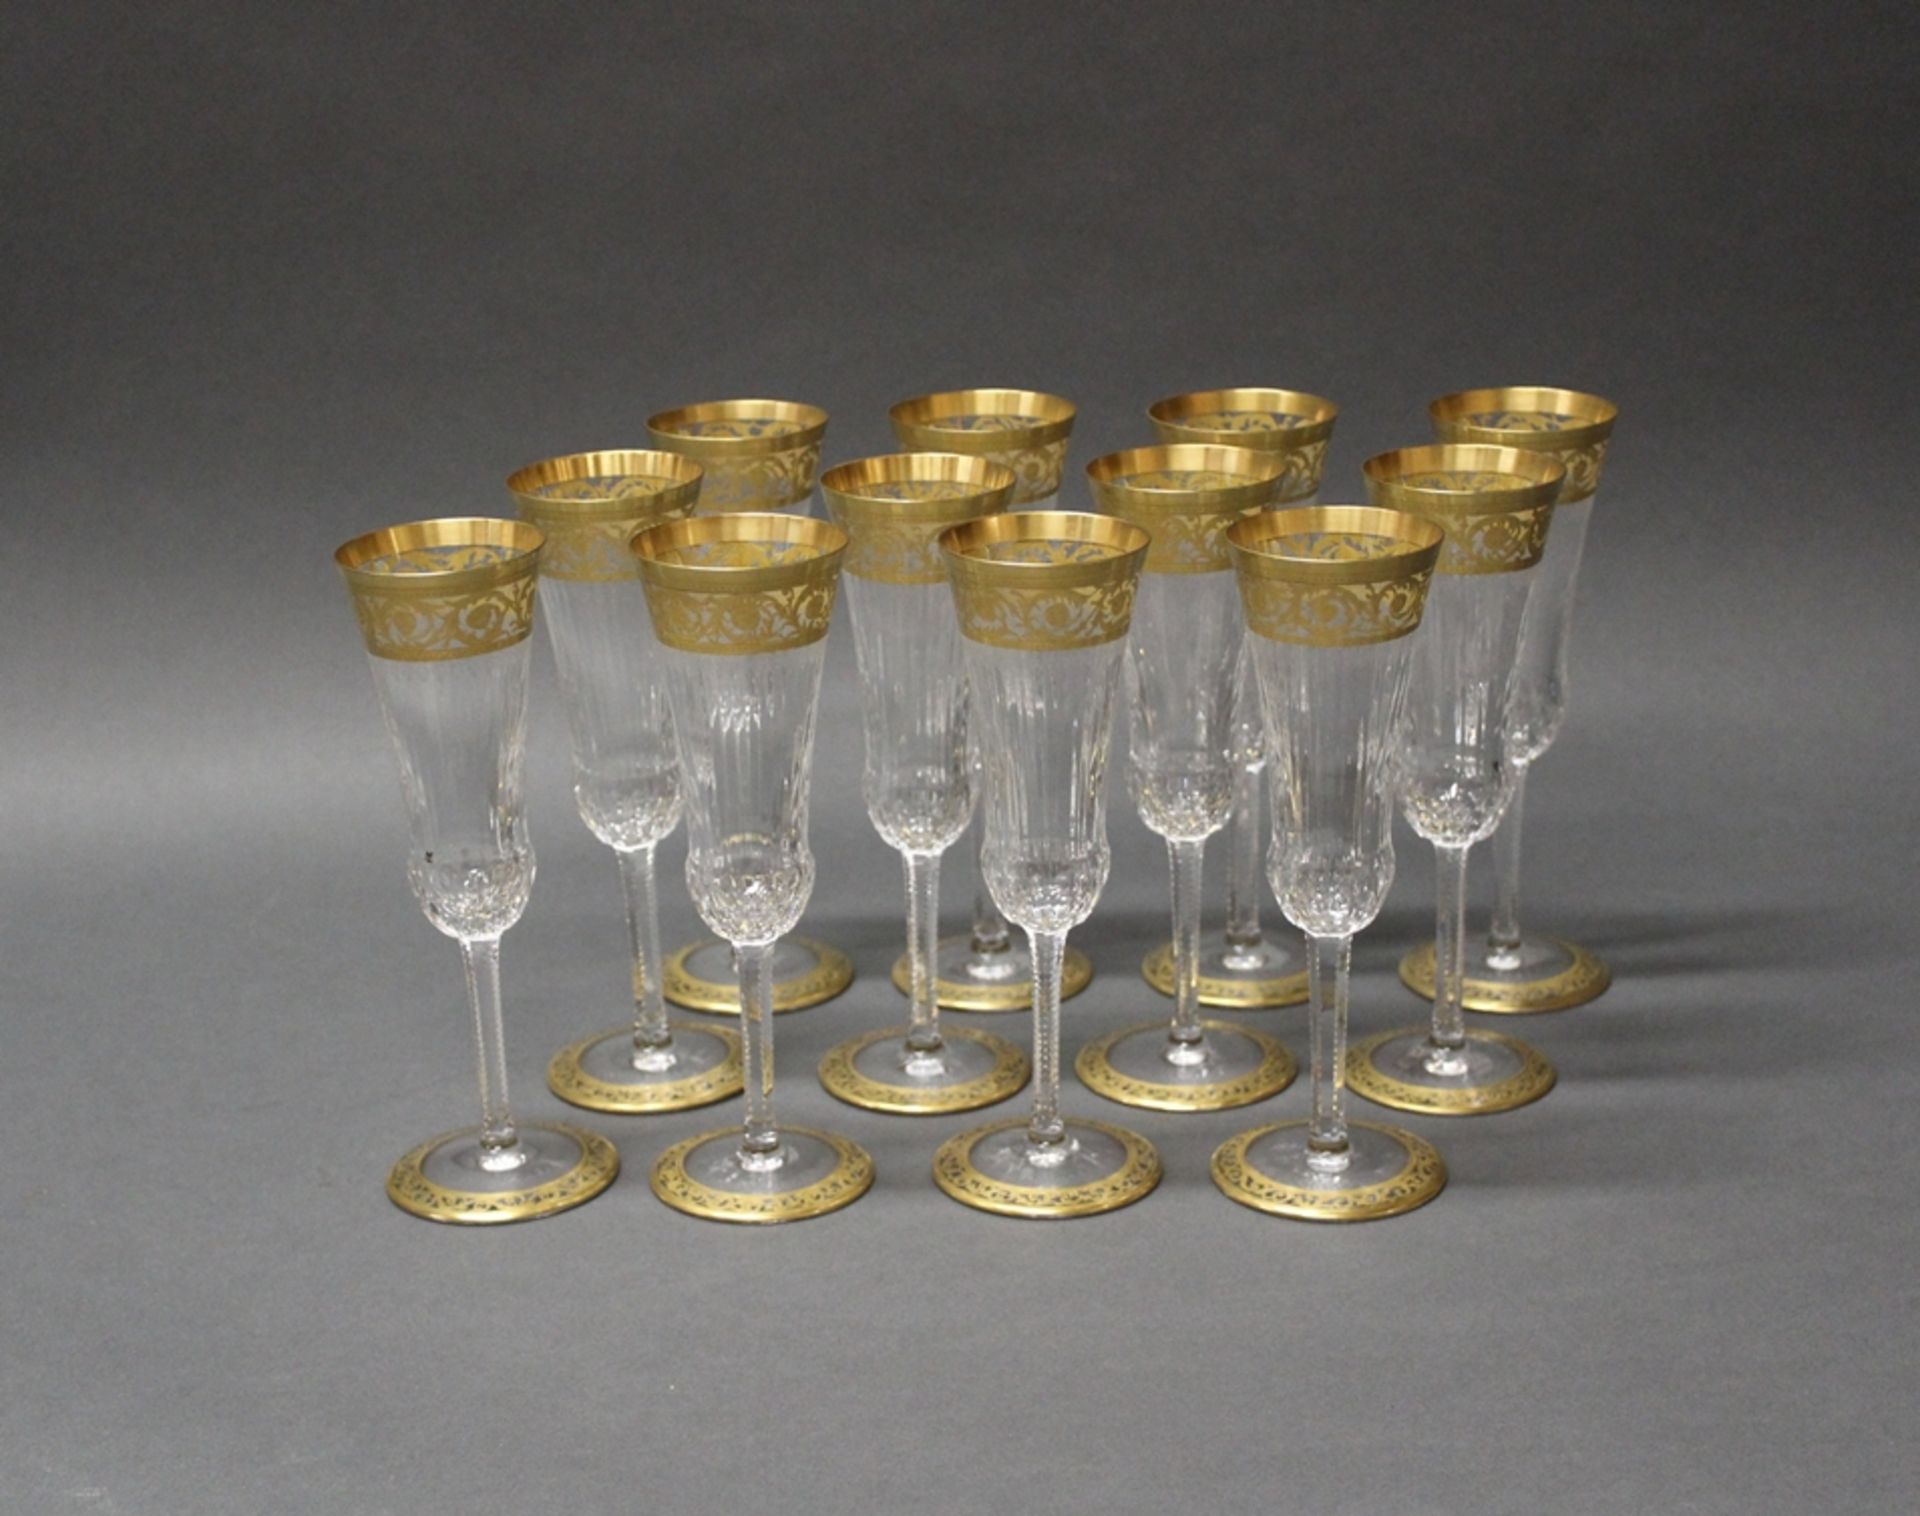 12 Champagnerflöten, "Thistle", Cristallerie Saint Louis, 2. Hälfte 20. Jh., Dekor Thistle Gold, fa